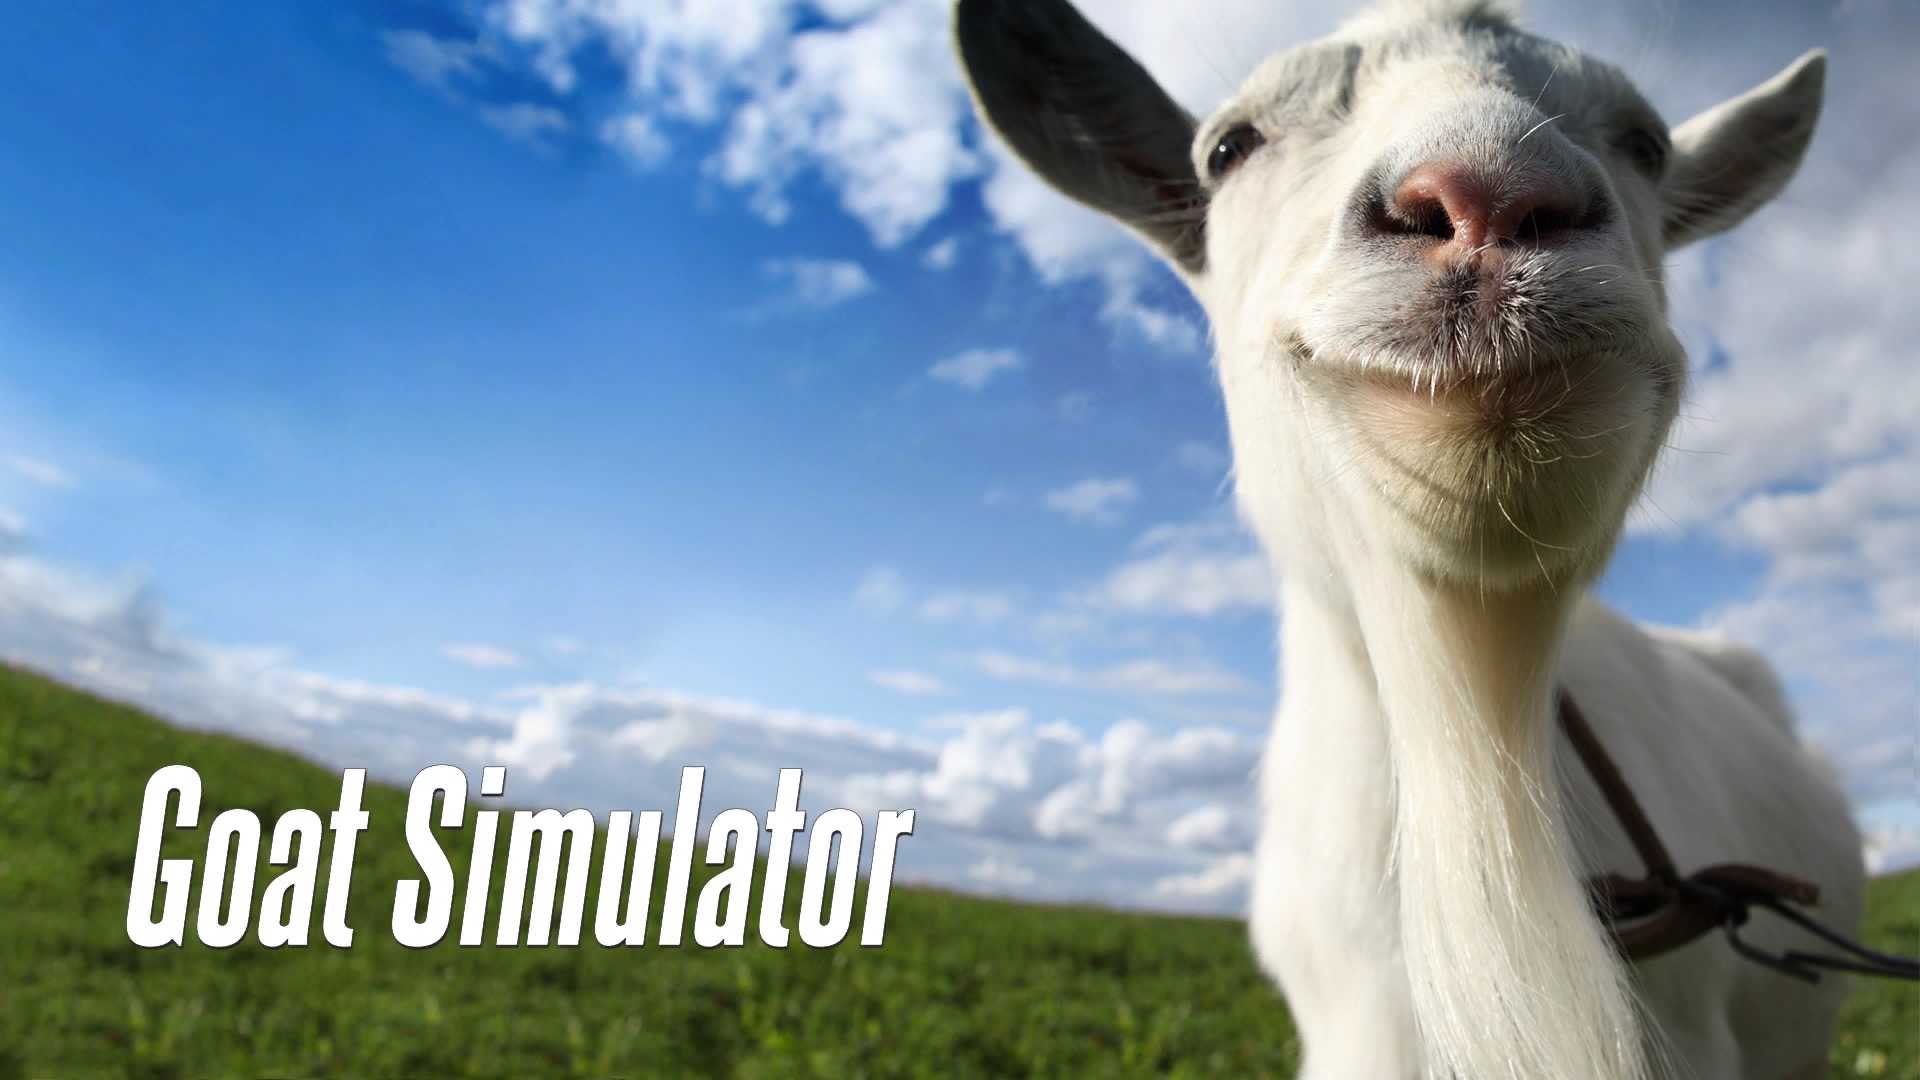 Goat Simulator とかいう謎のゲーム 0と1